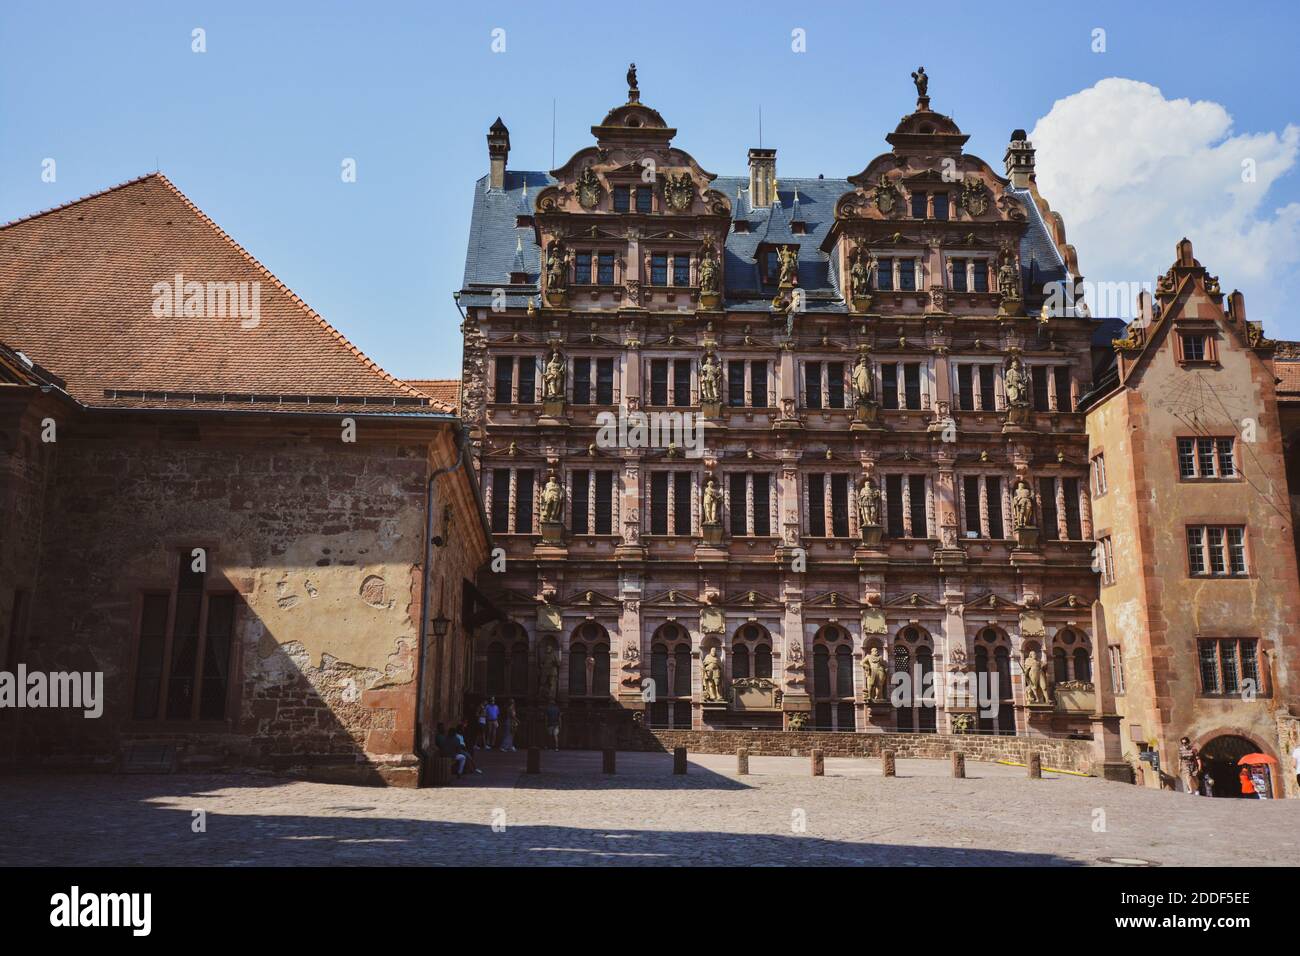 Heidelberg architecture, historic windows and statues Stock Photo